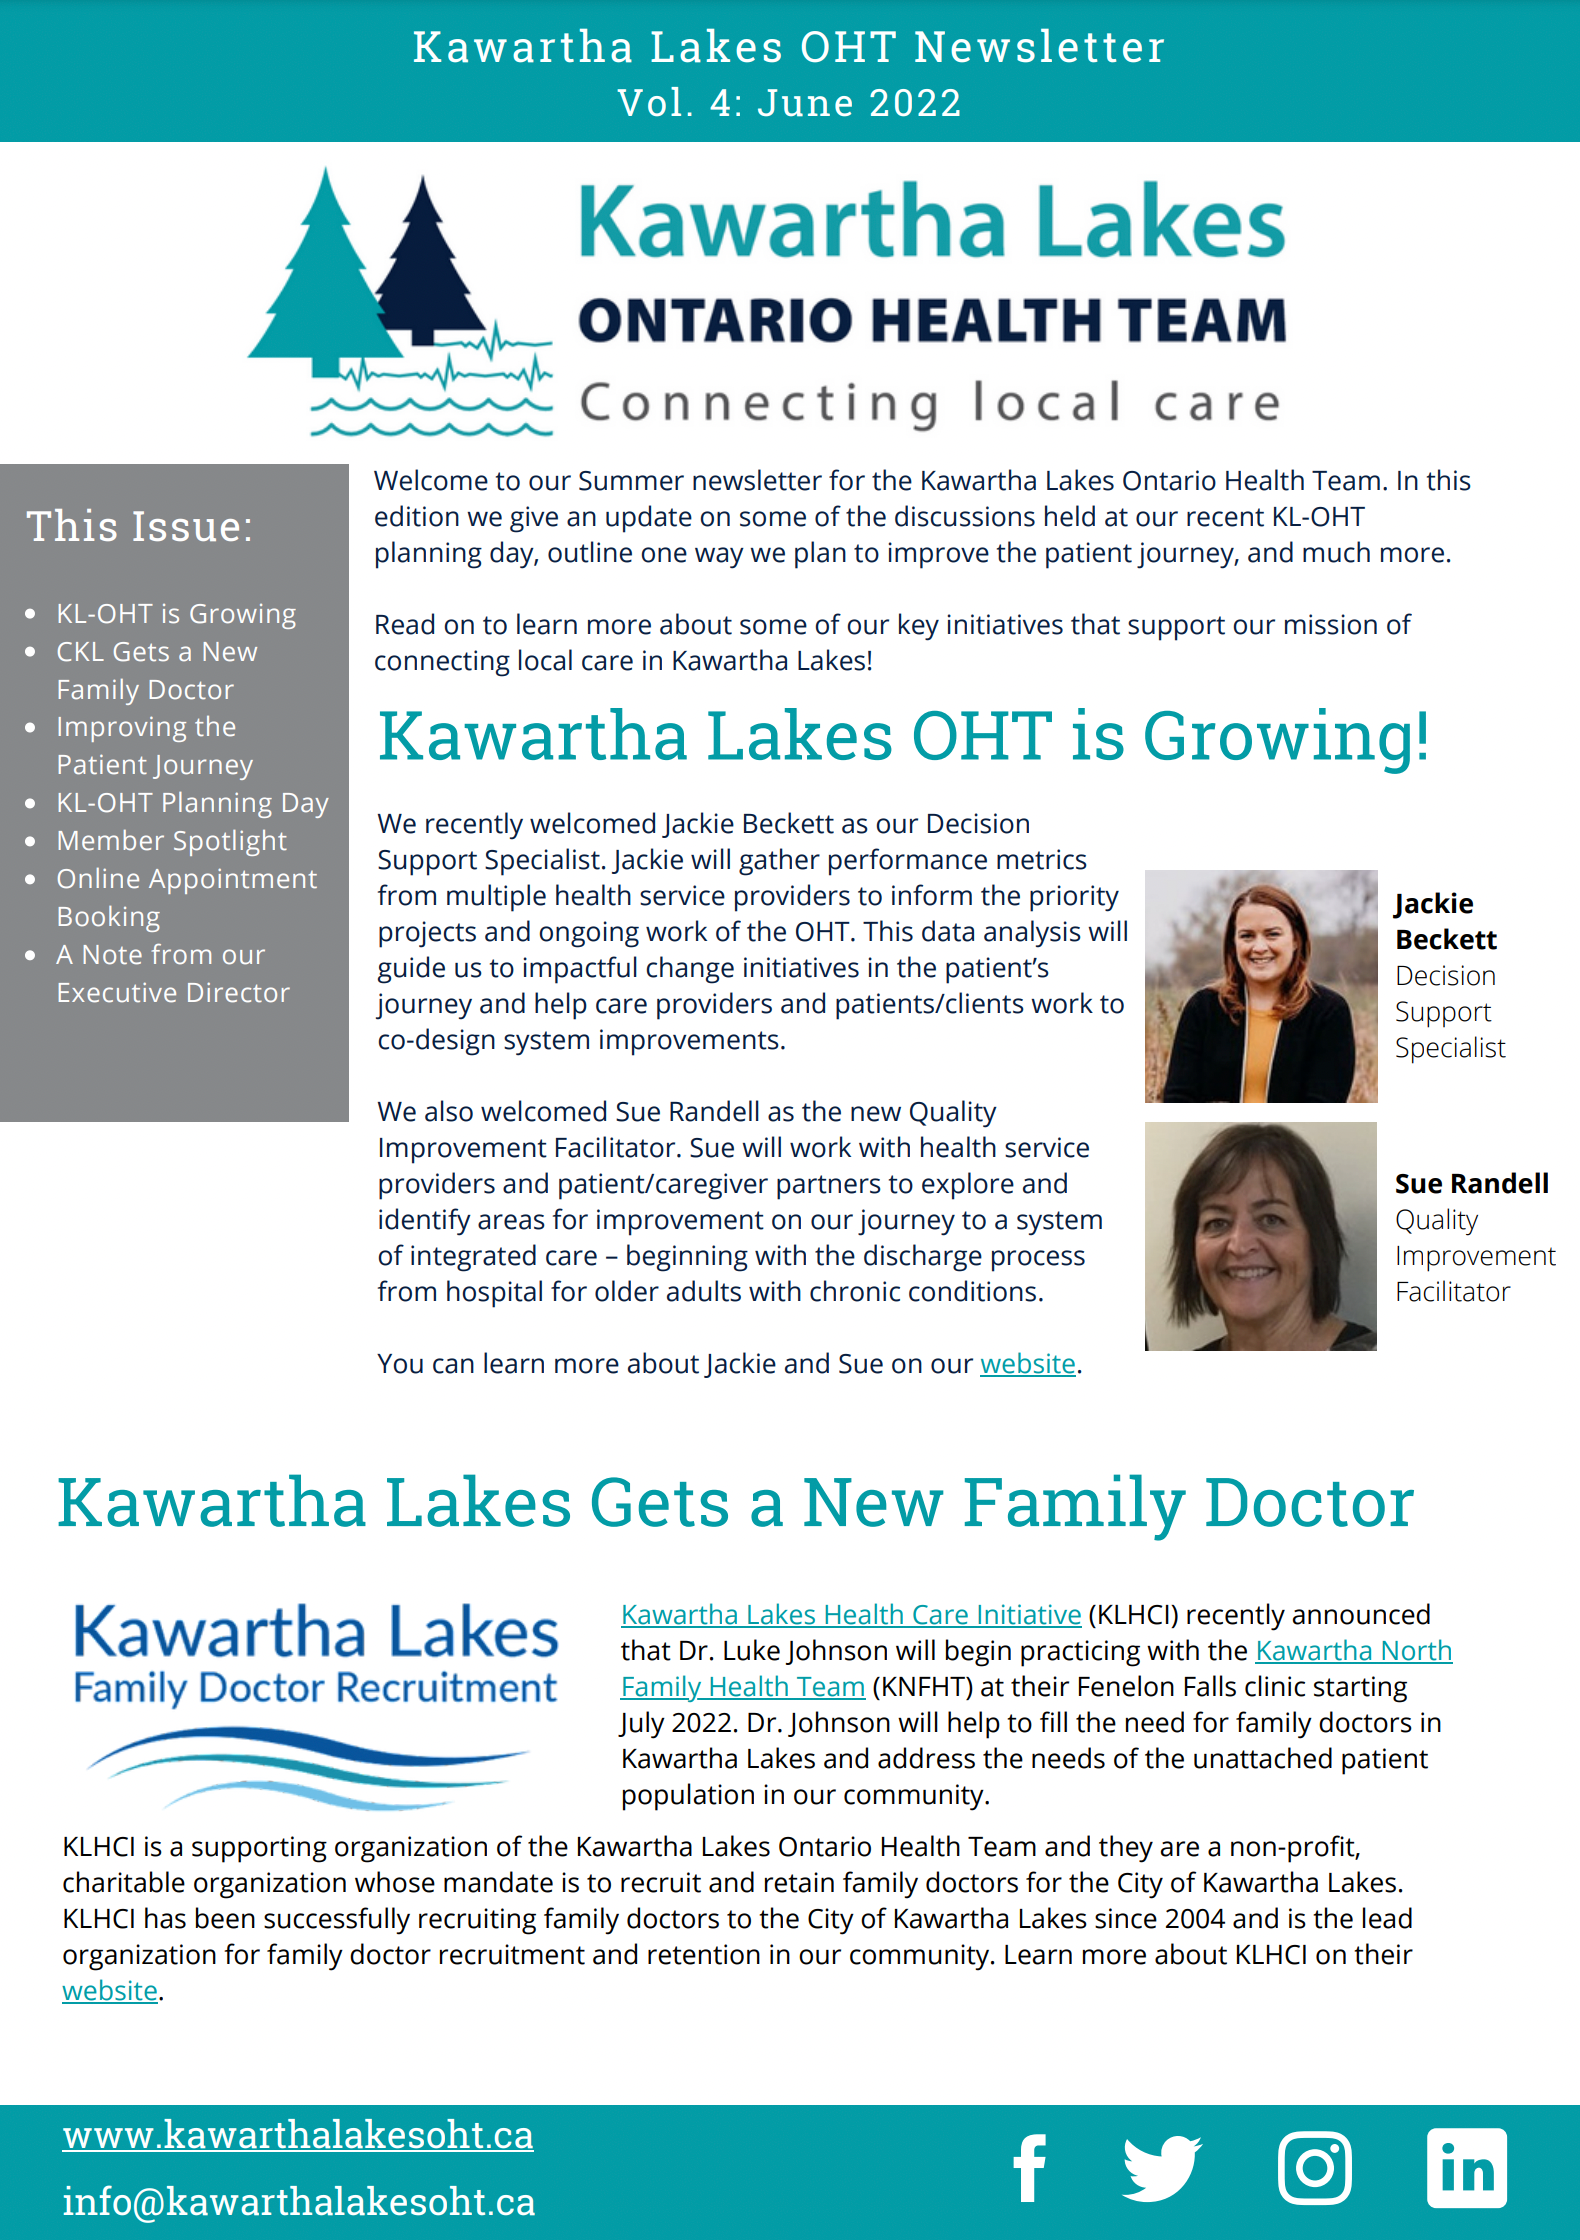 Kawartha lakes oht newsletter image